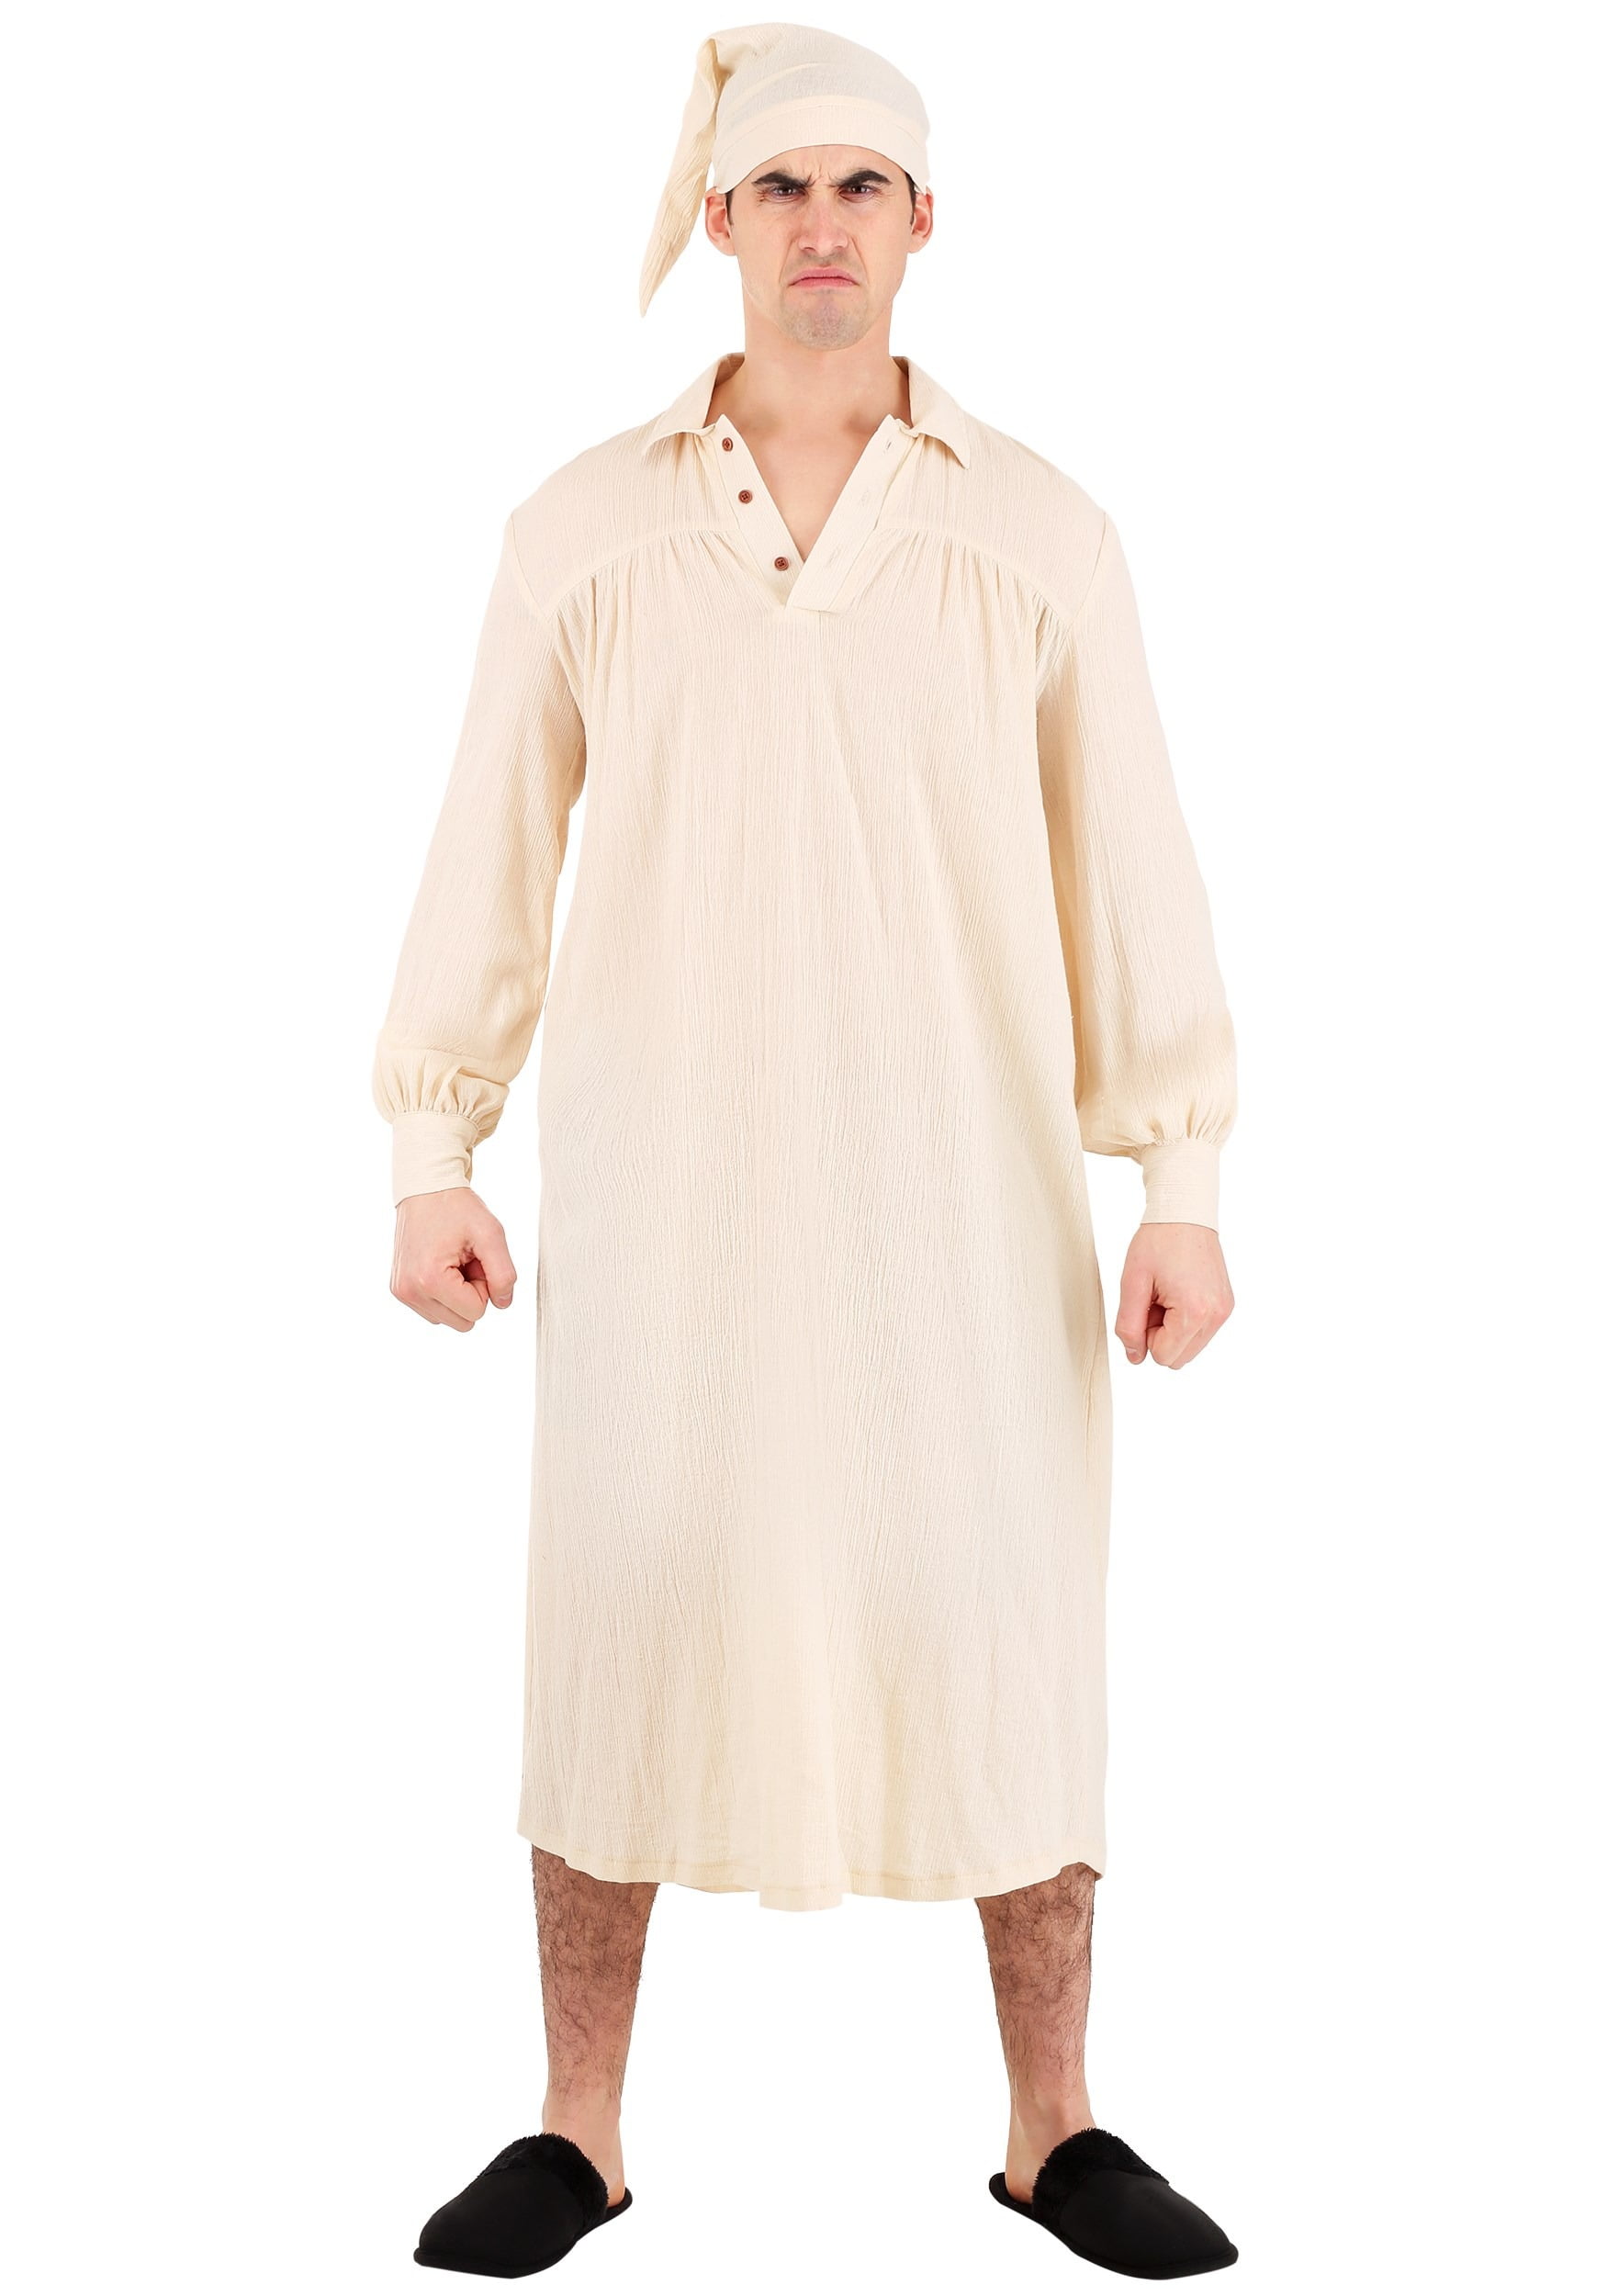 Men's Humbug Nightgown Costume - Walmart.com